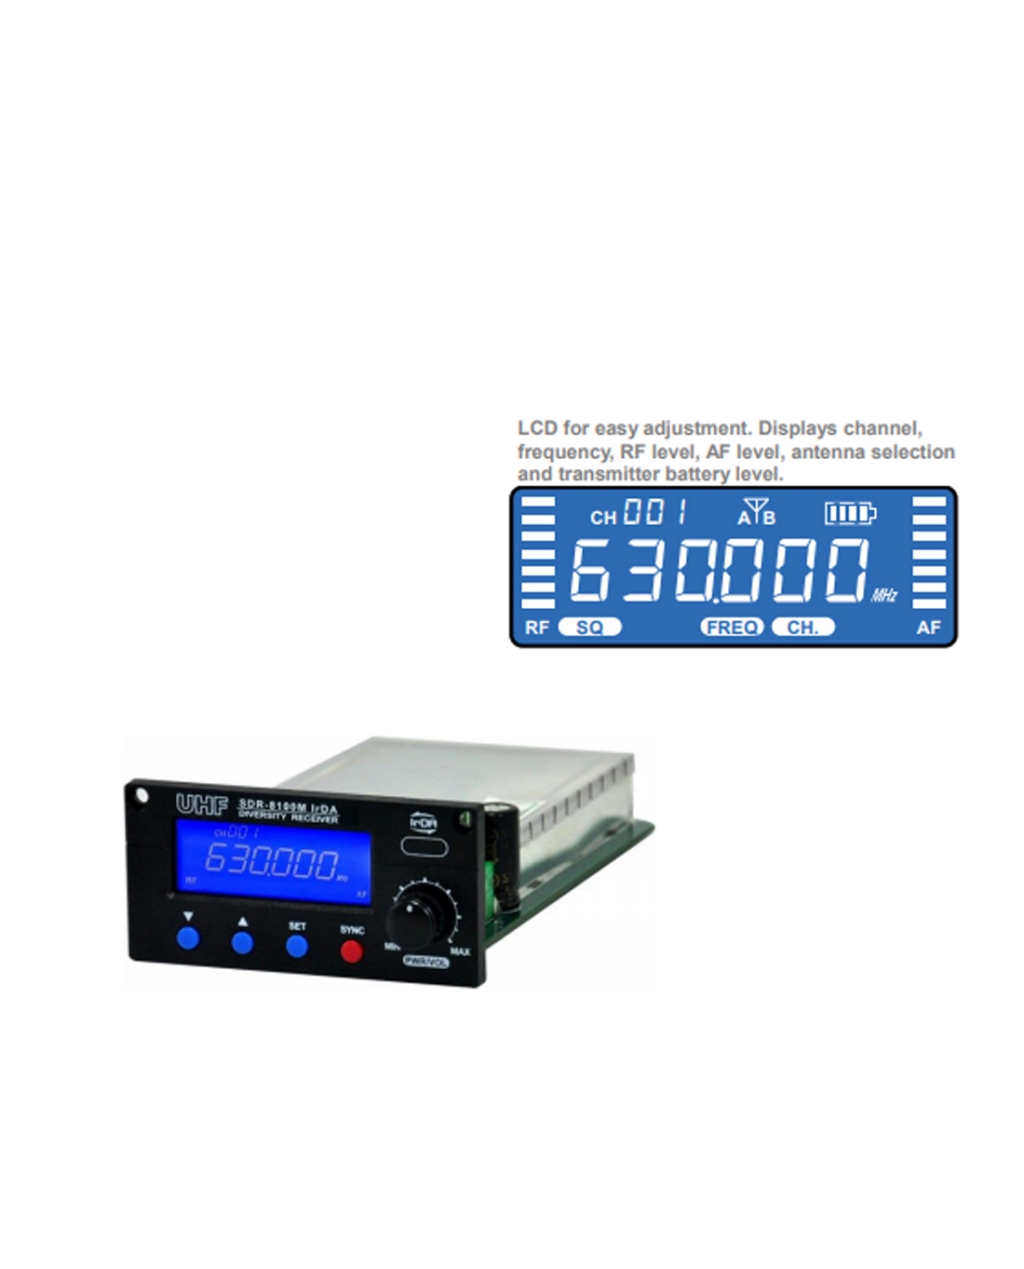 SDR-8100M IrDA, 100 Channel Cordless Receiver Module